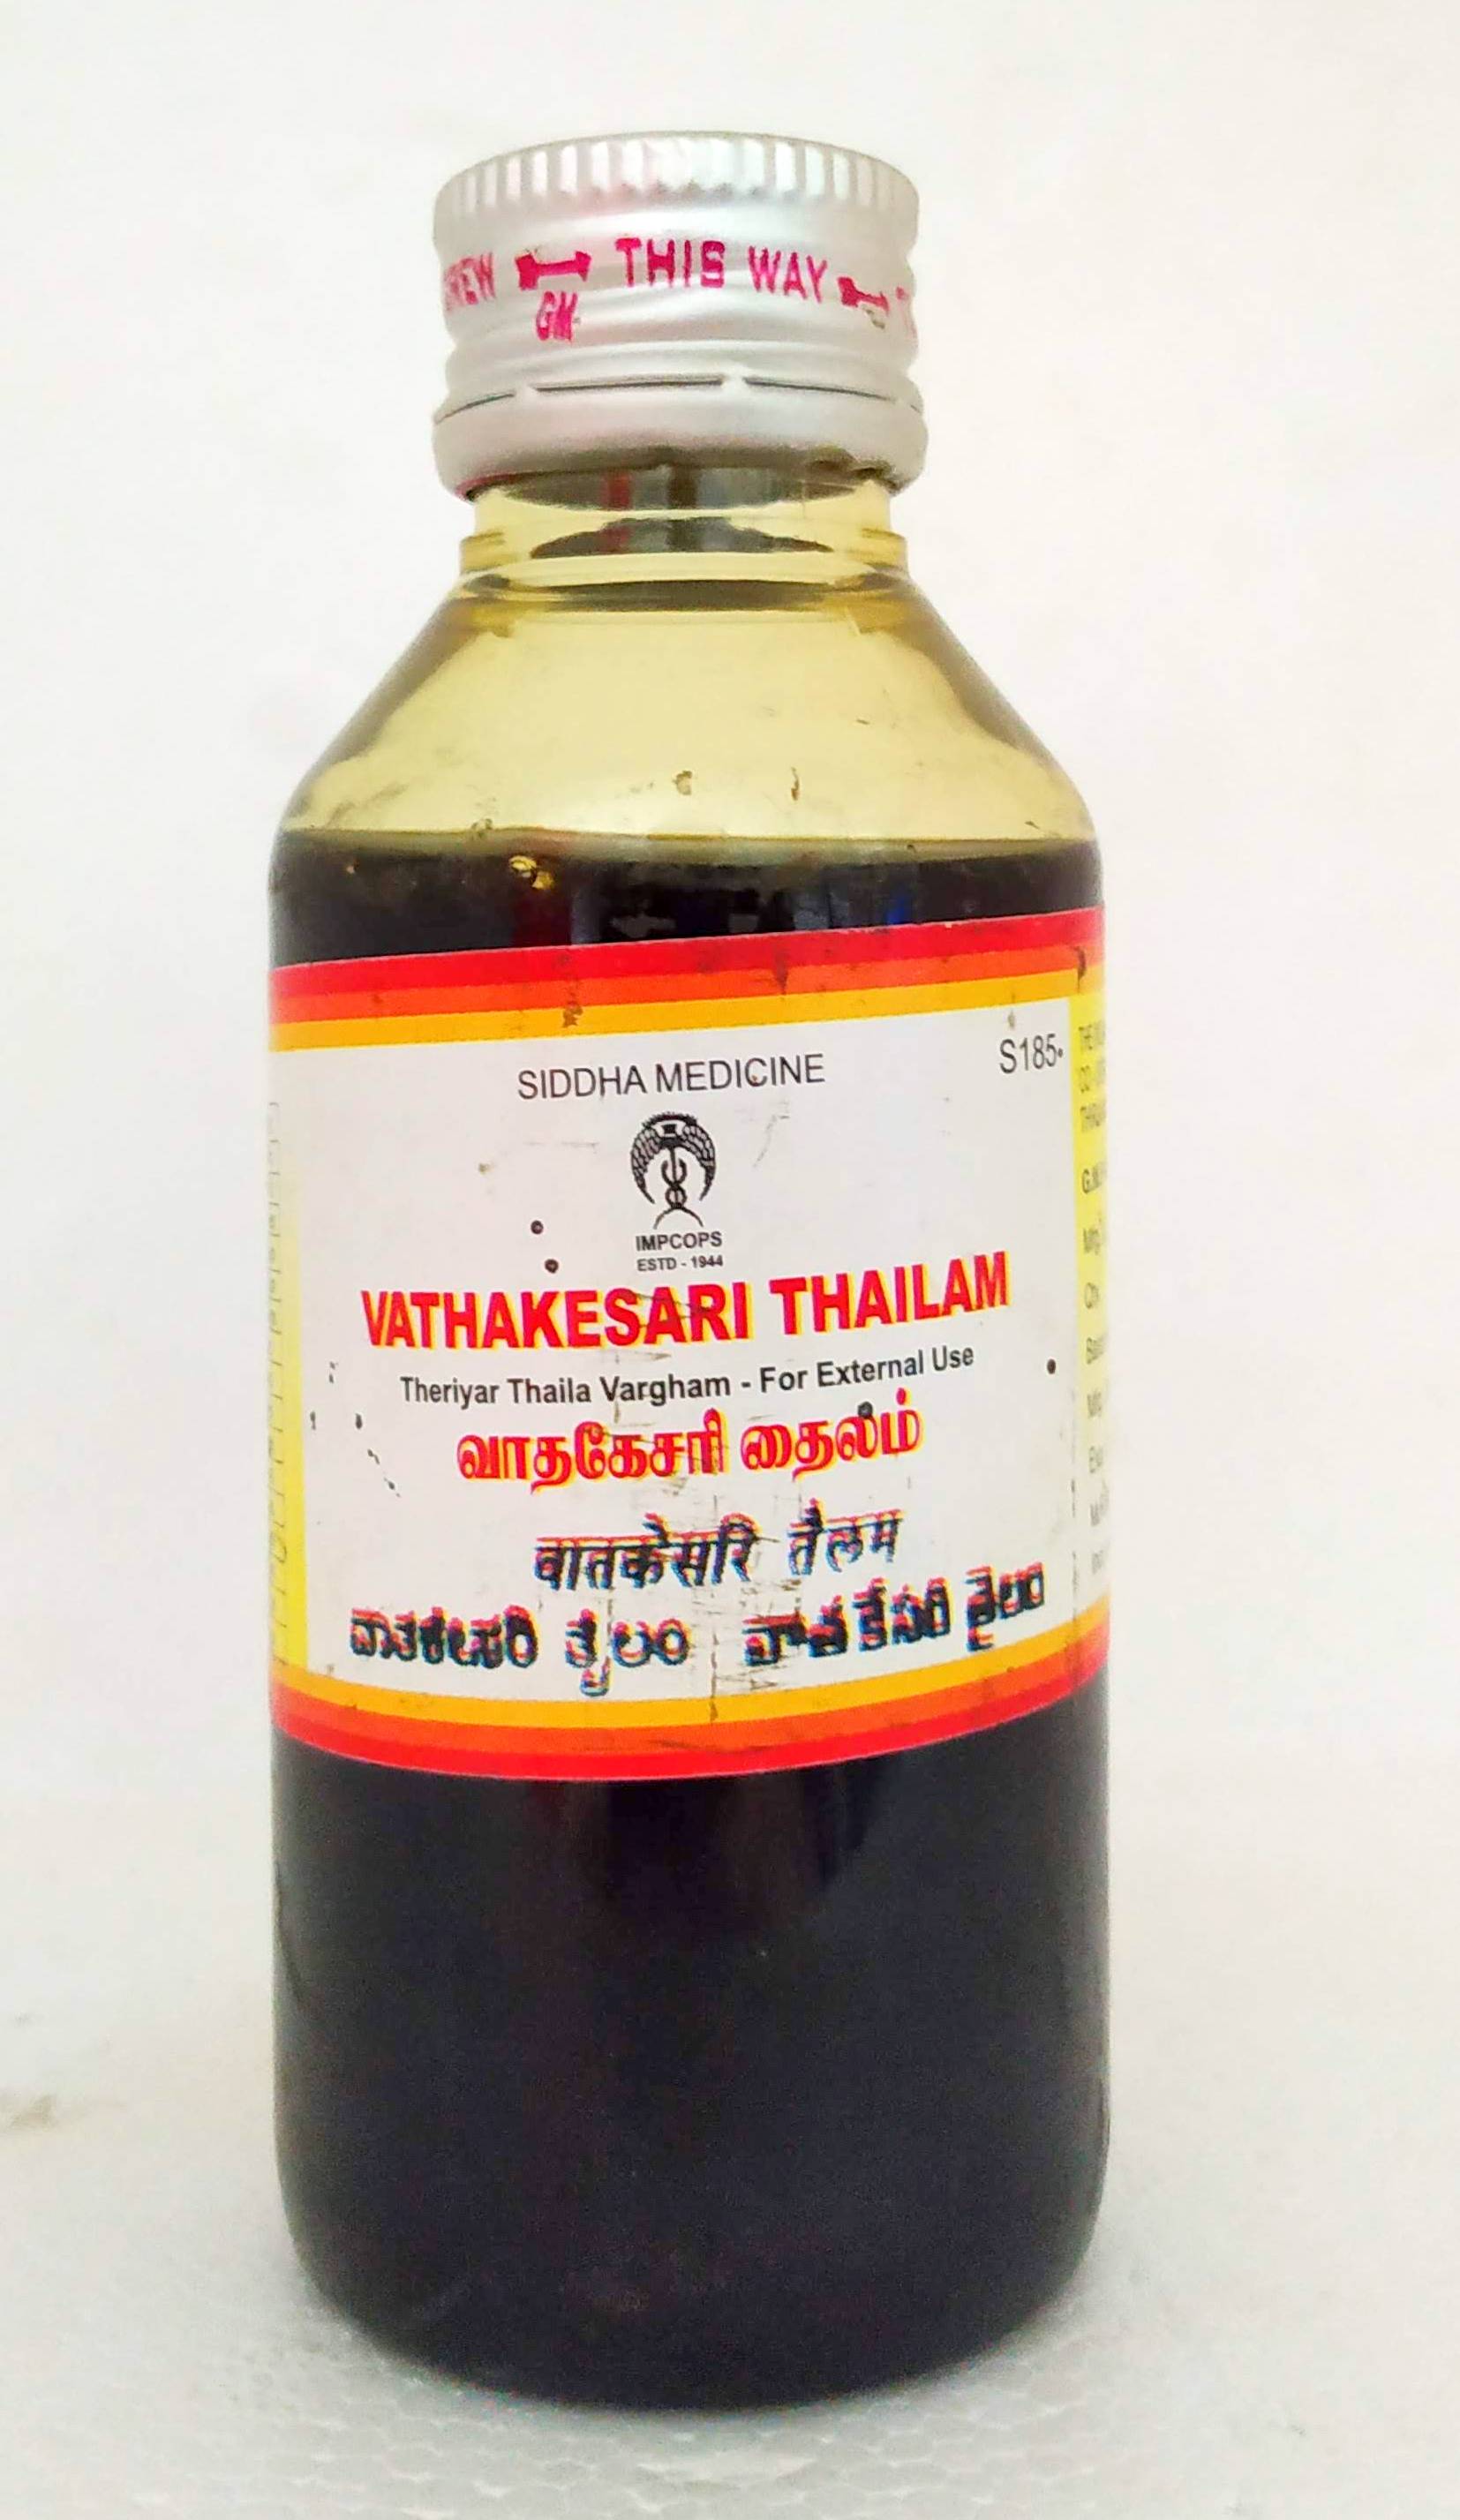 Shop Vathakesari Thailam 100ml at price 131.00 from Impcops Online - Ayush Care